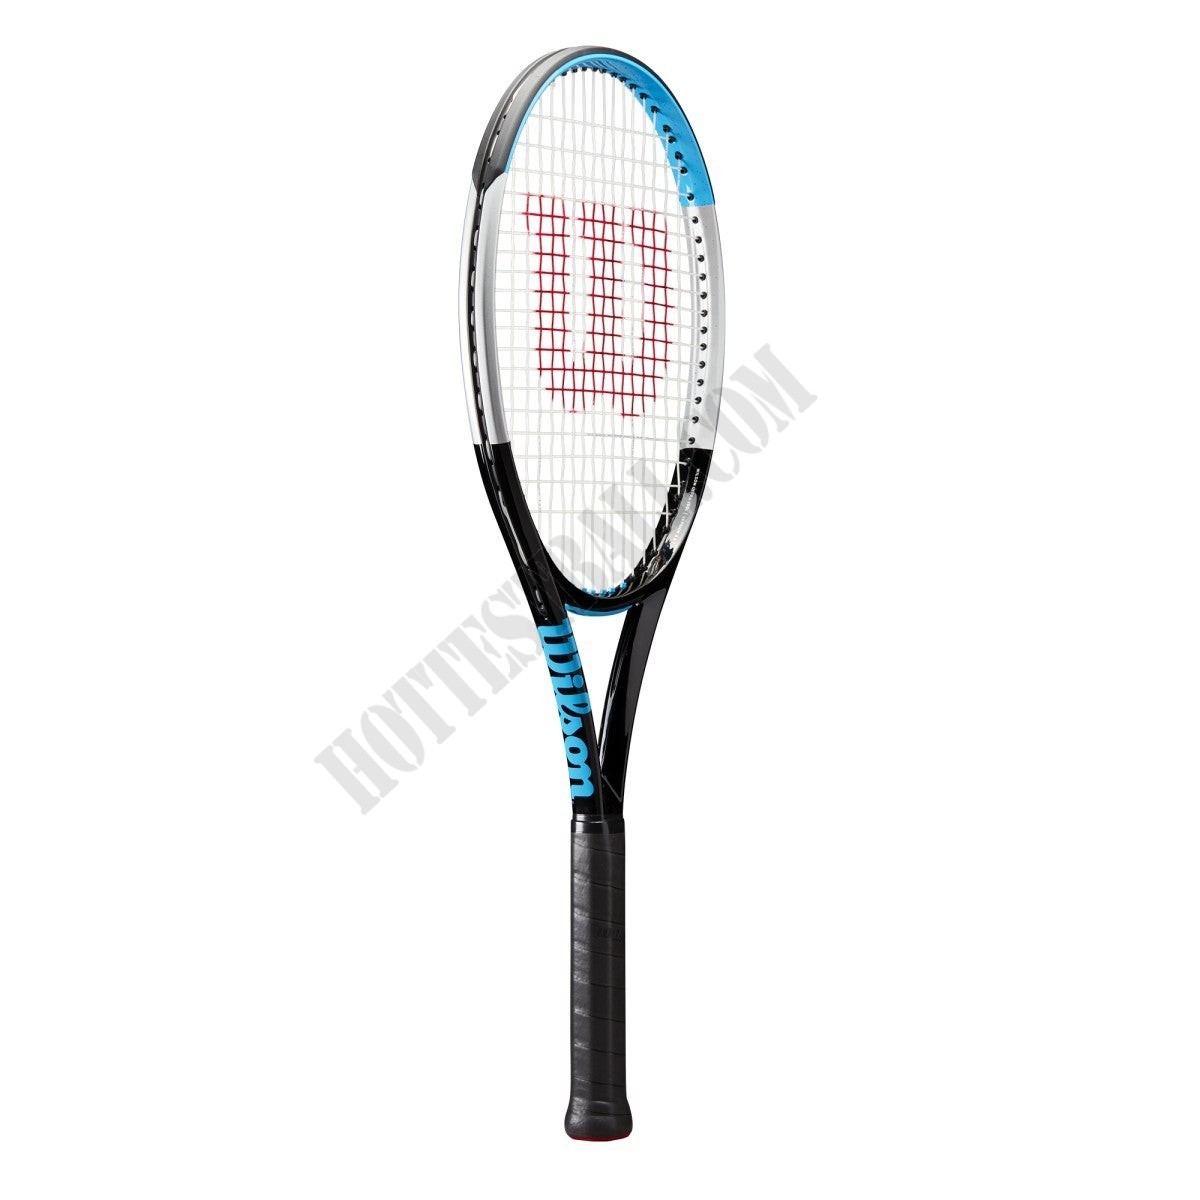 Ultra 100L v3 Tennis Racket - Wilson Discount Store - Ultra 100L v3 Tennis Racket - Wilson Discount Store